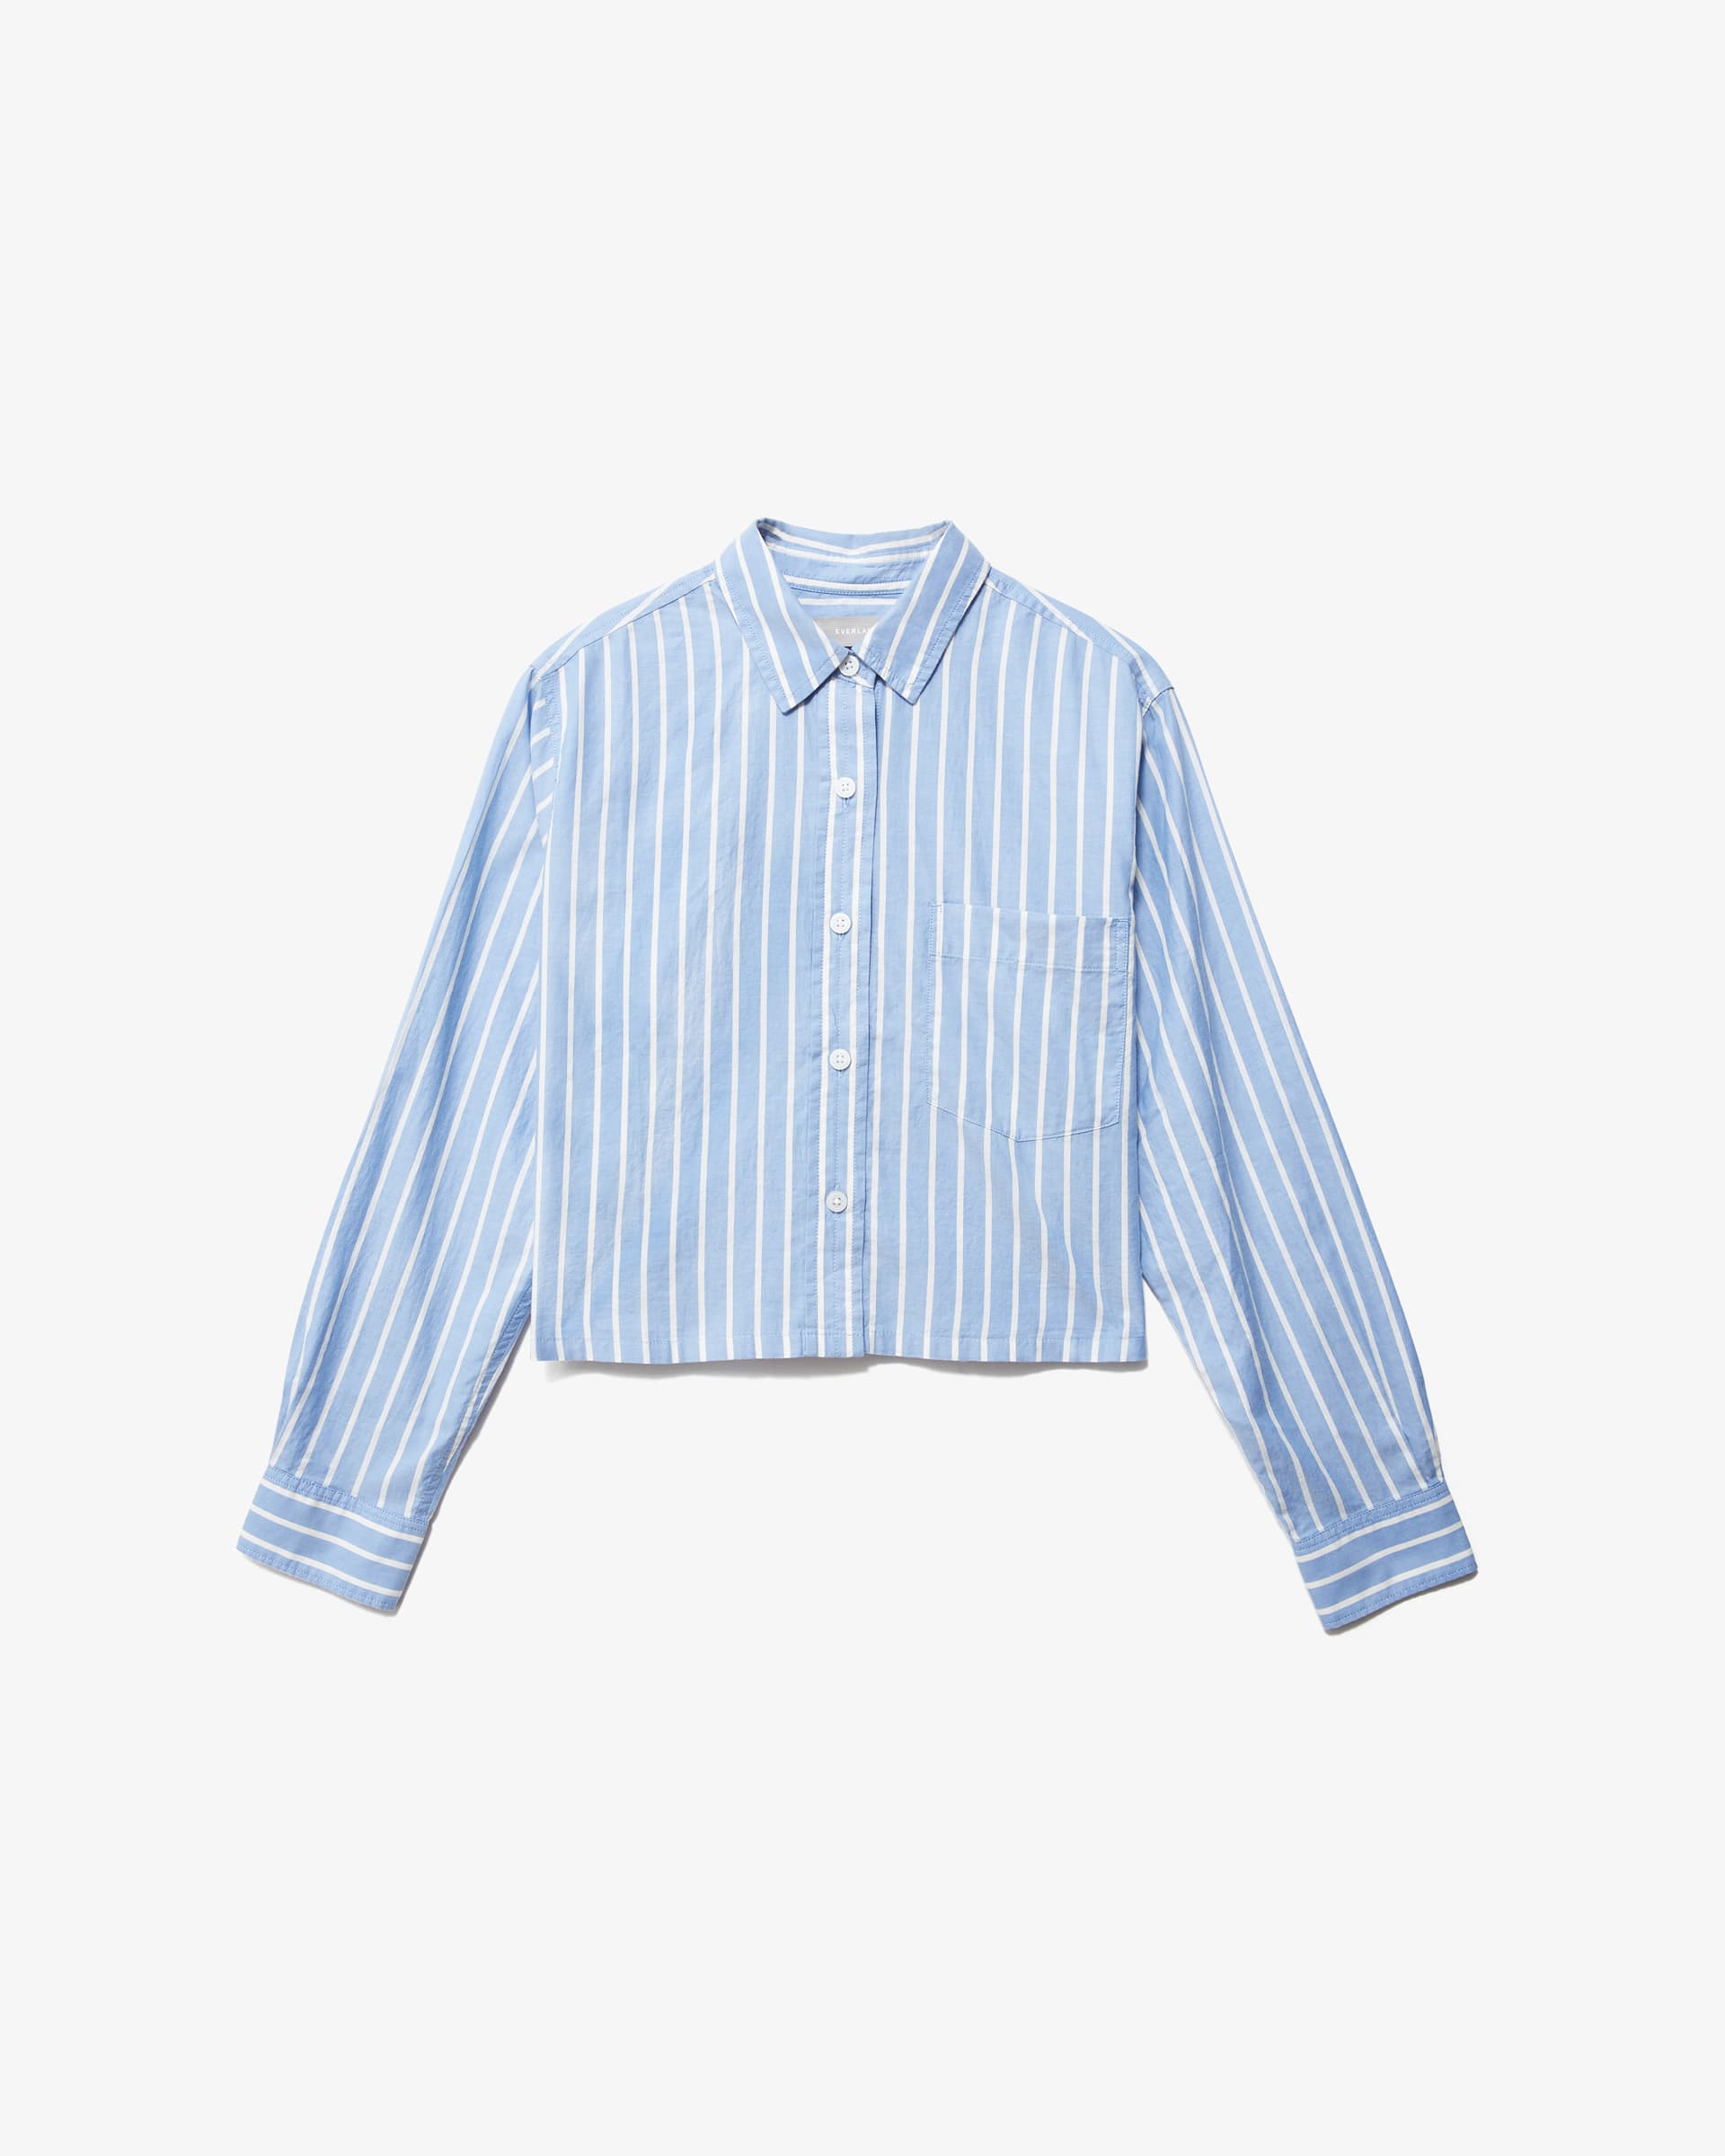 The Silky Cotton Way-Short Shirt Mariner Blue / White – Everlane